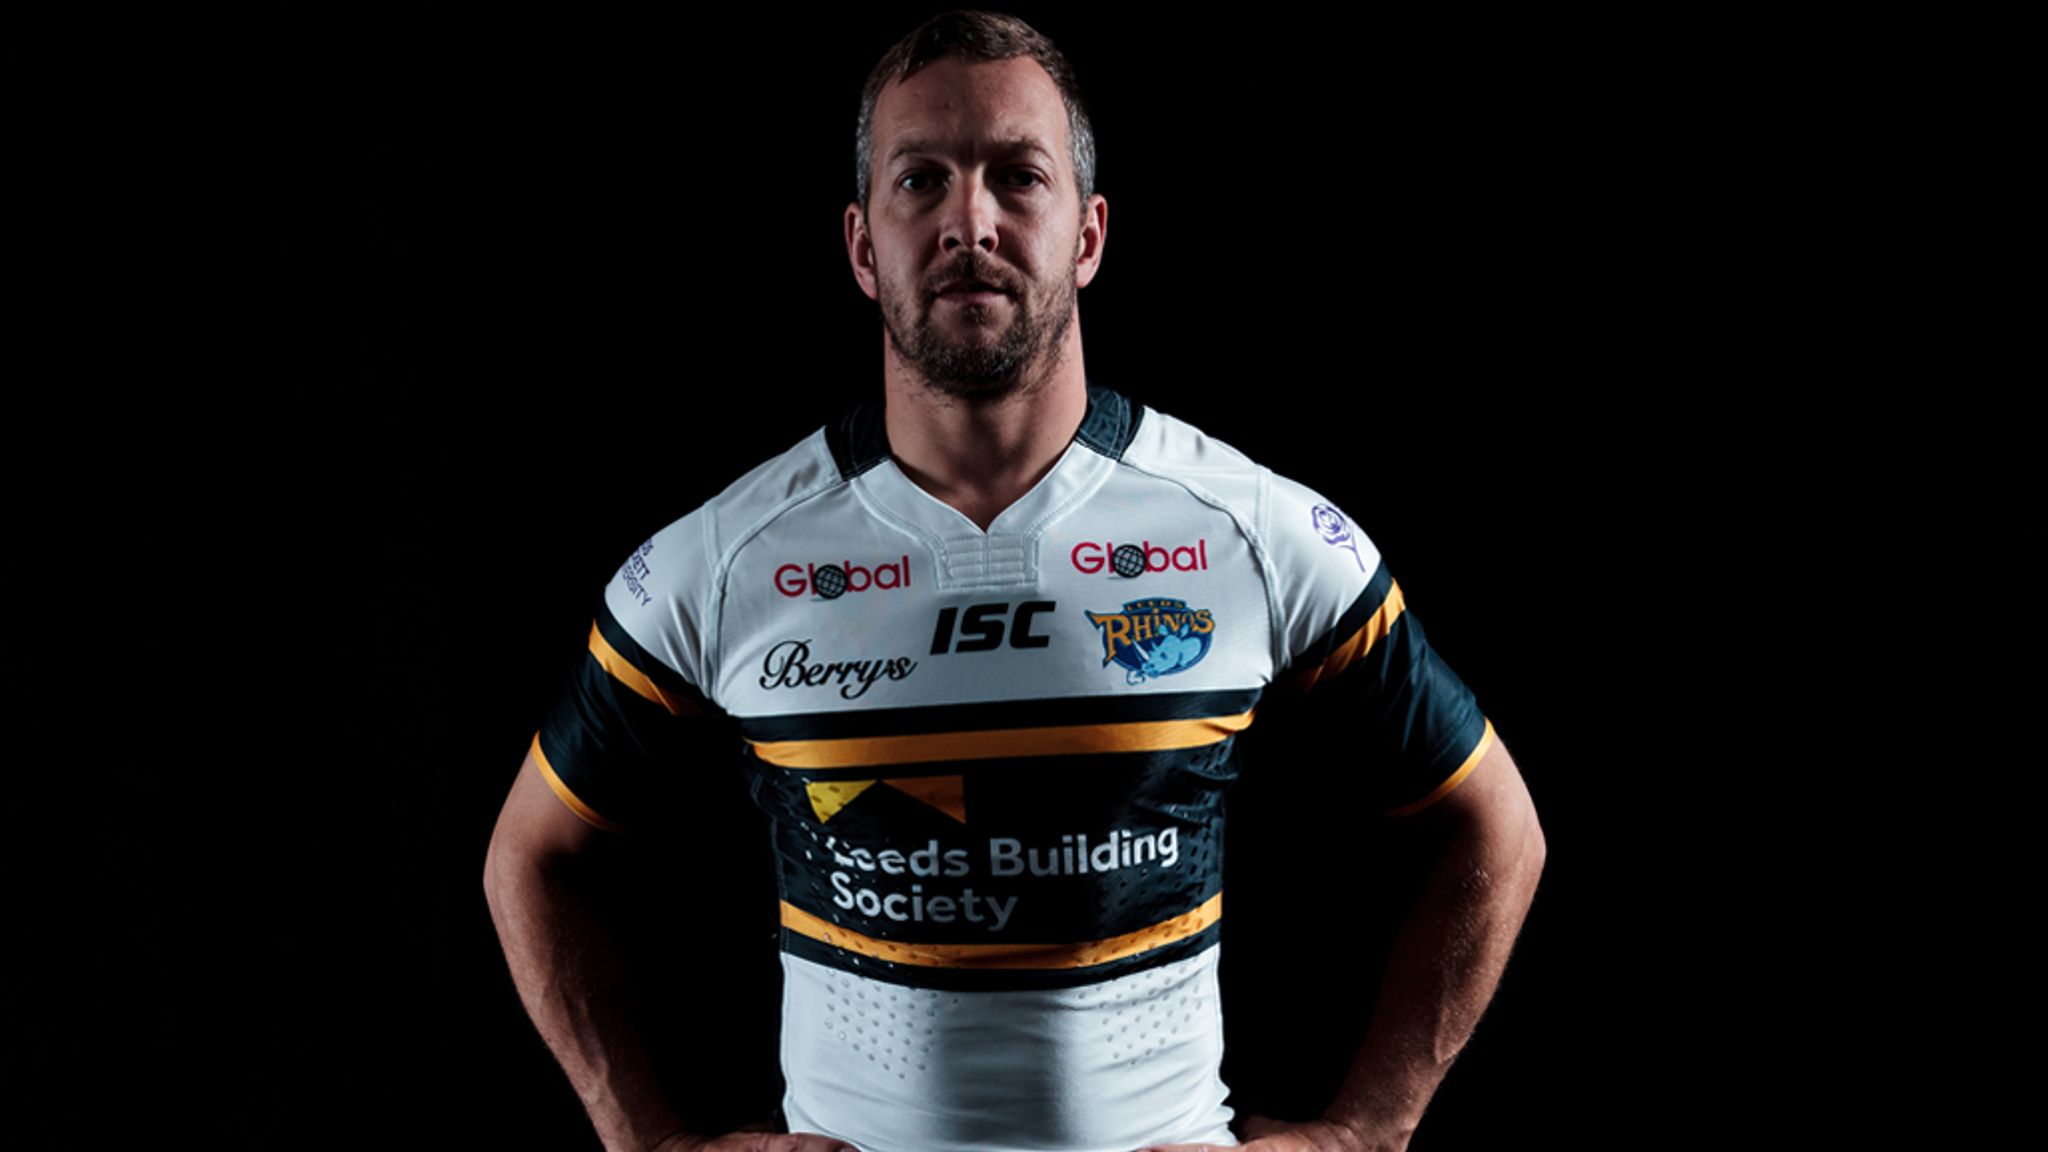 Mempire Mens T-Shirt Leeds Rhinos Rugby Jersey 2019,Rhinoceros Rugby T-Shirt for Men Fit Sportswear Short Sleeve Sport Shirt